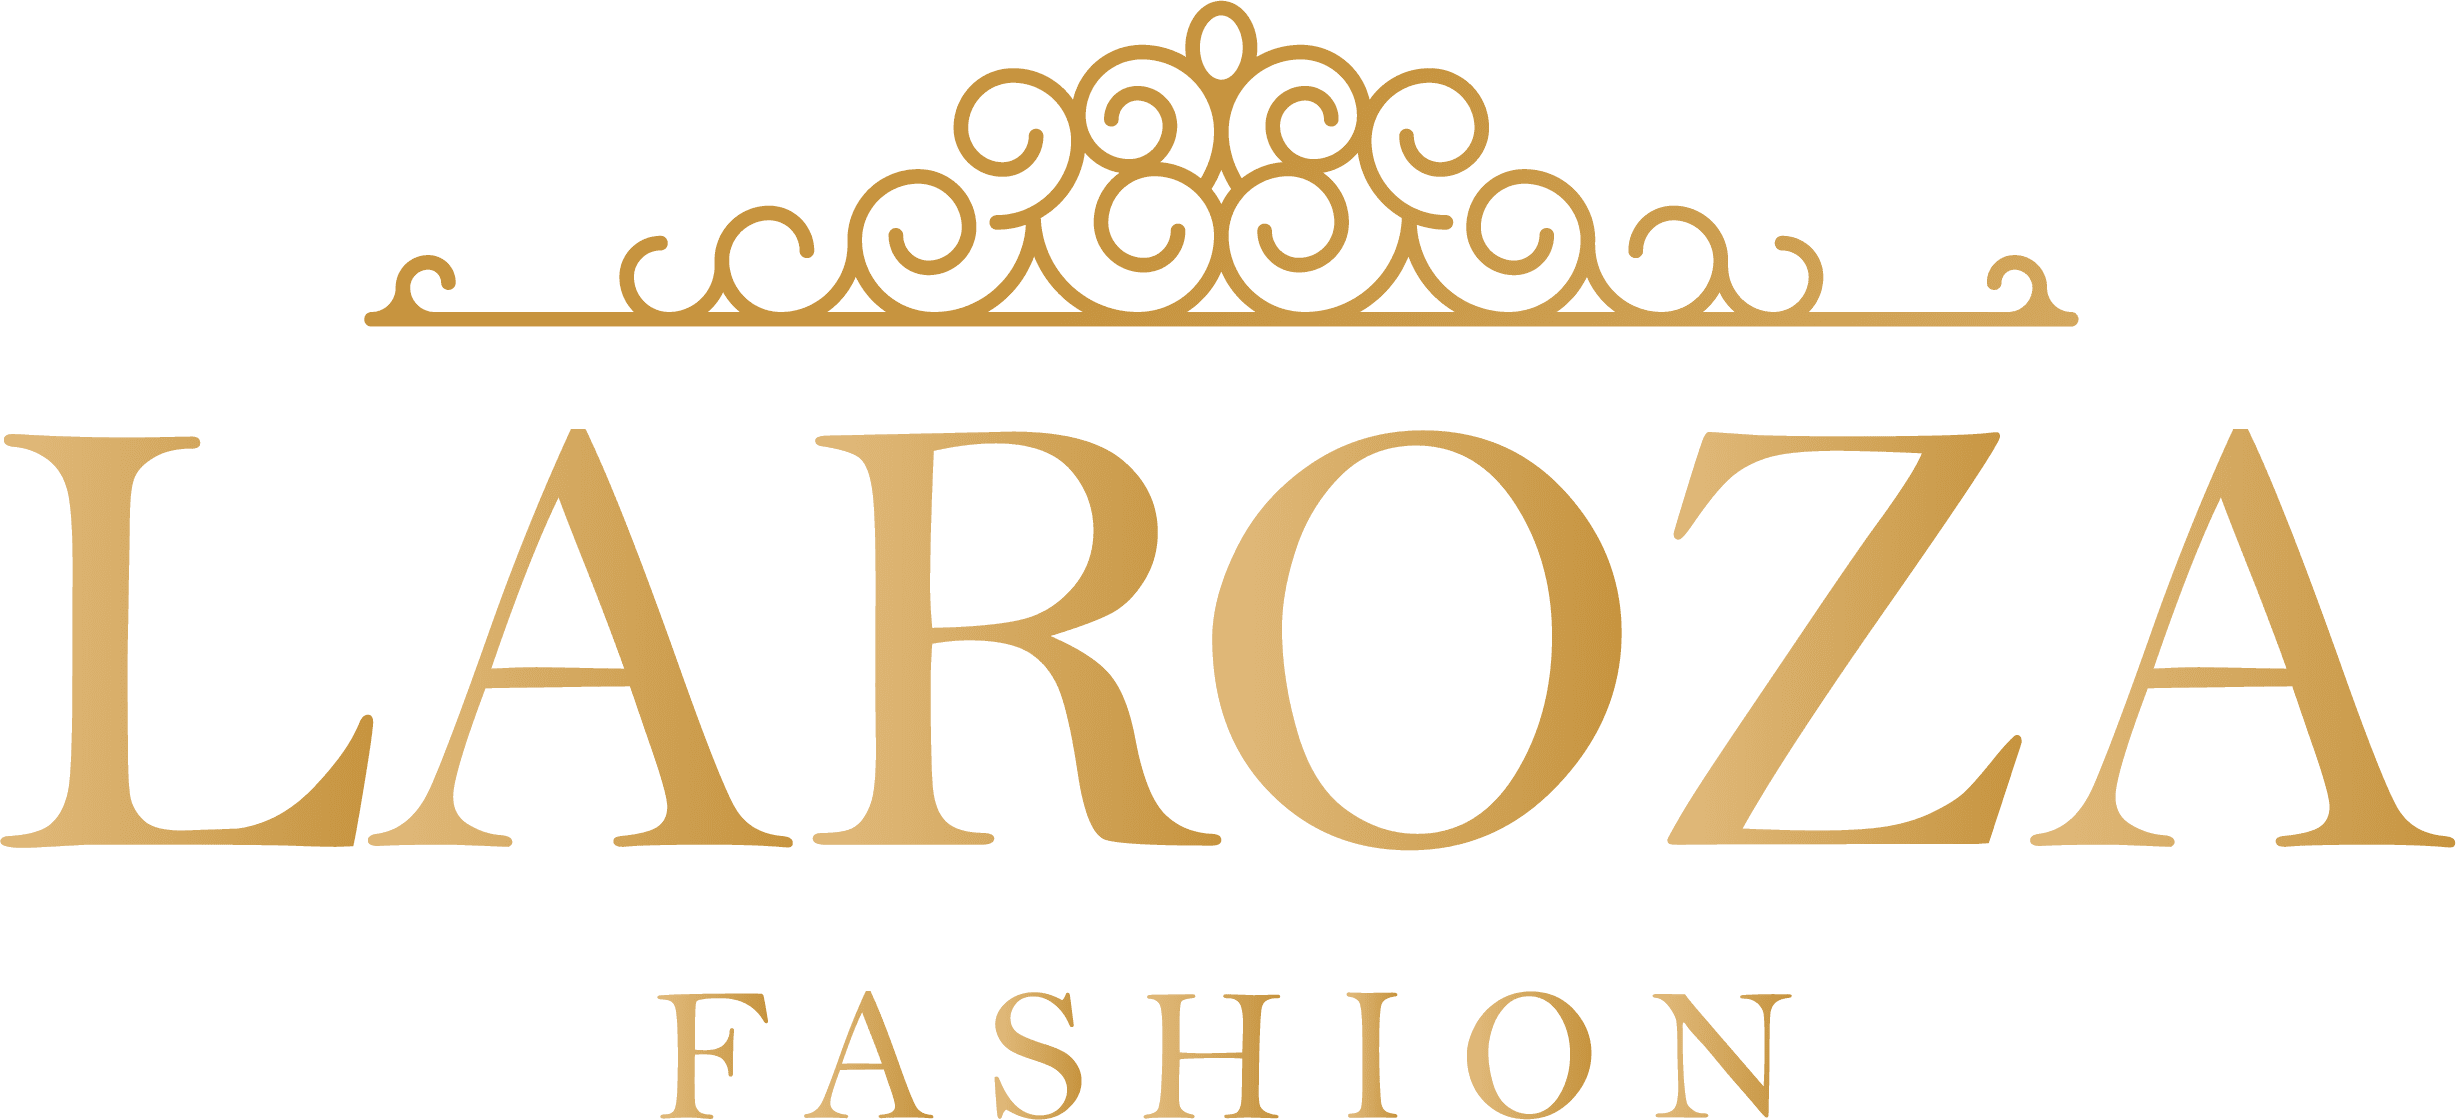 Laroza Fashion